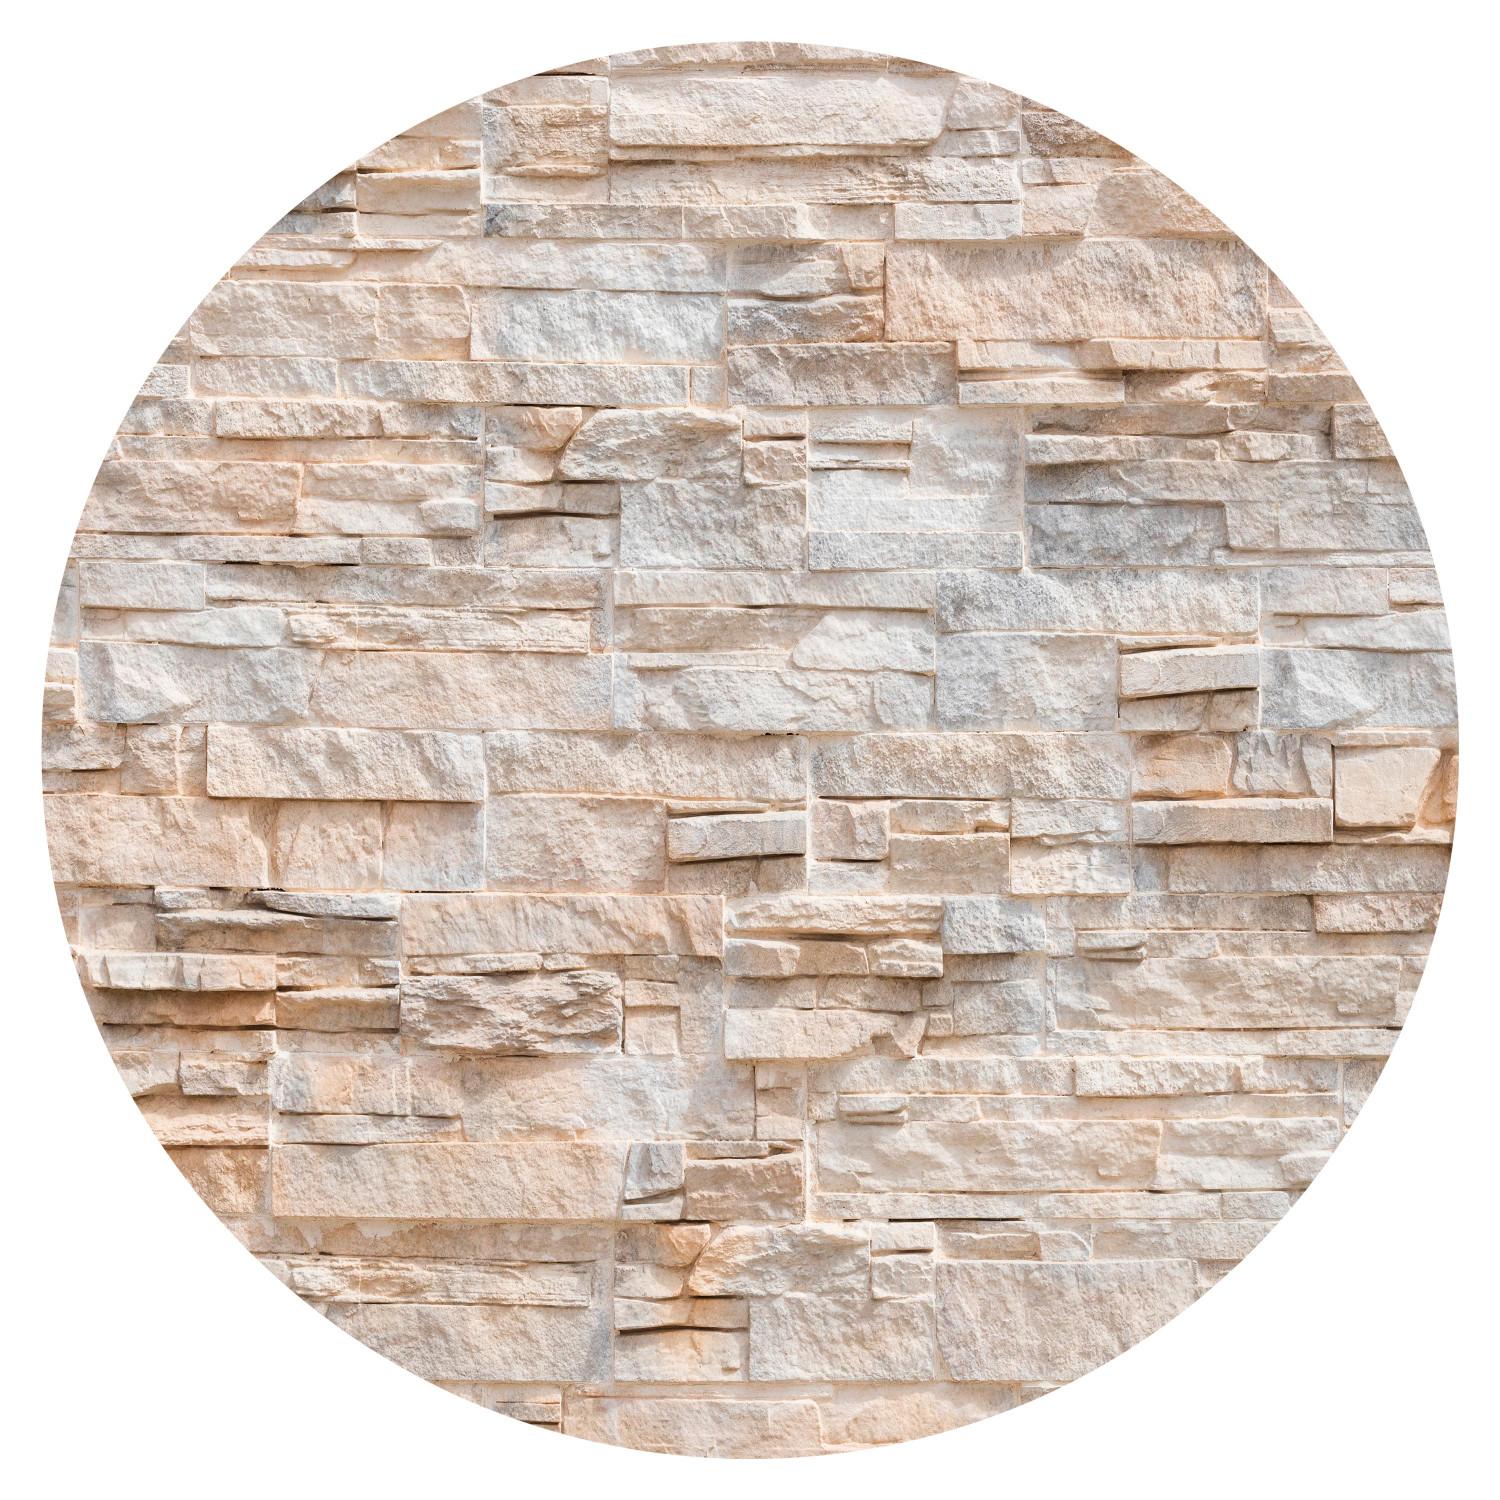 Fotomurales redondos Decorative Stone - Natural Wall of Sandstone Tiles